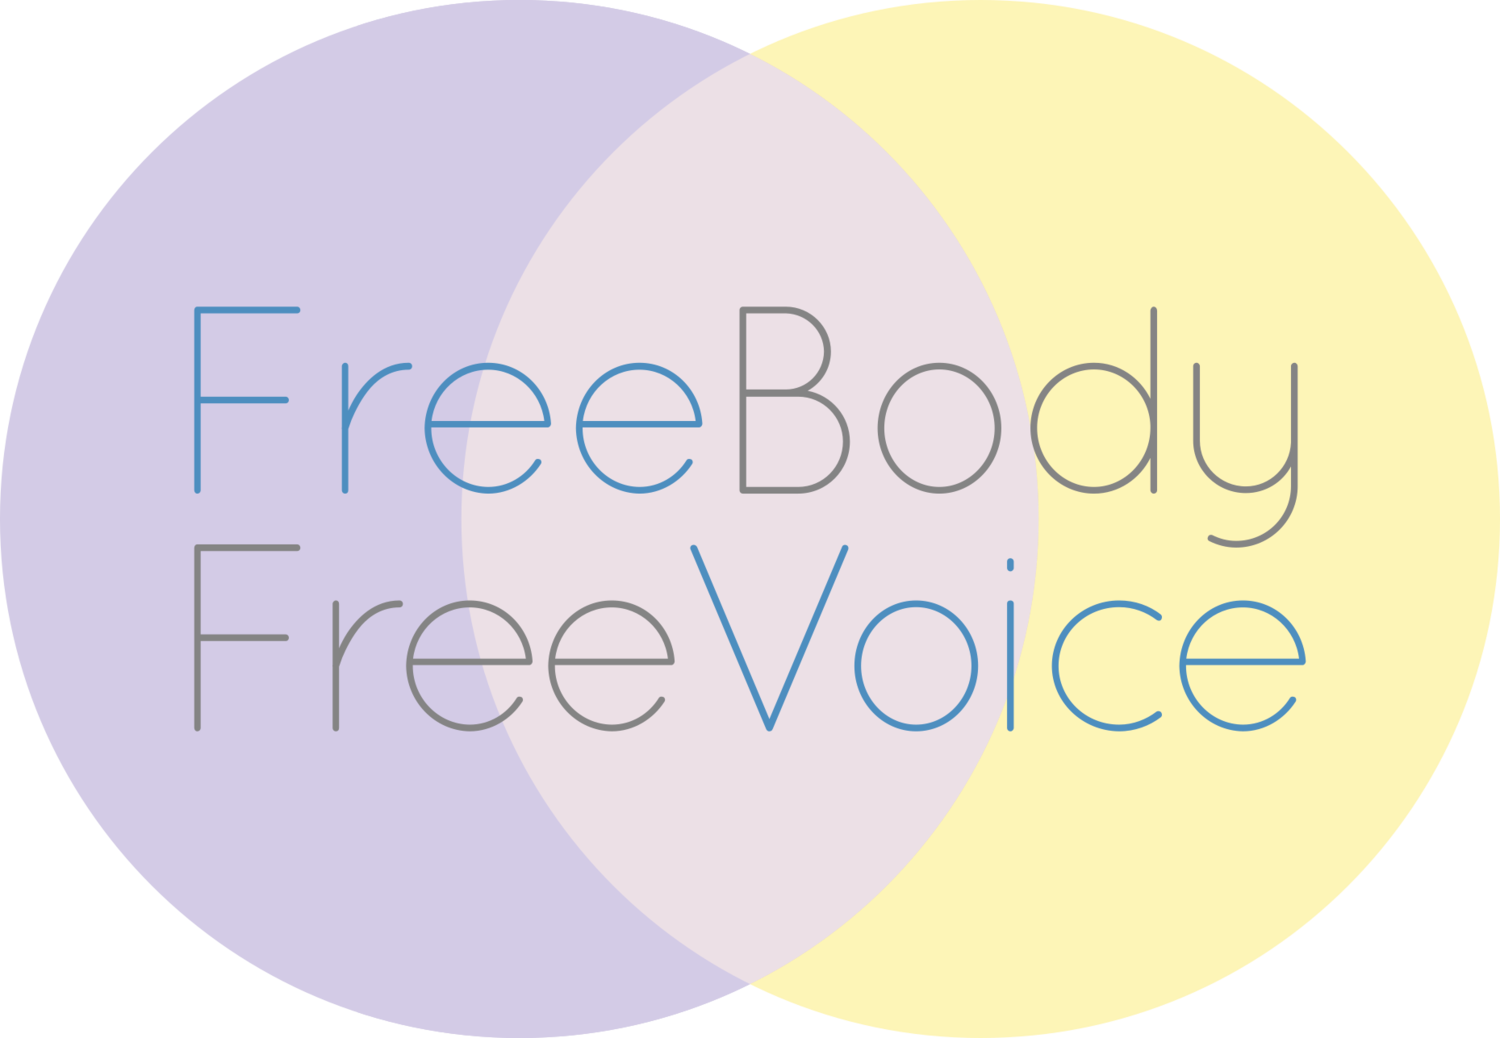 FreeBody FreeVoice